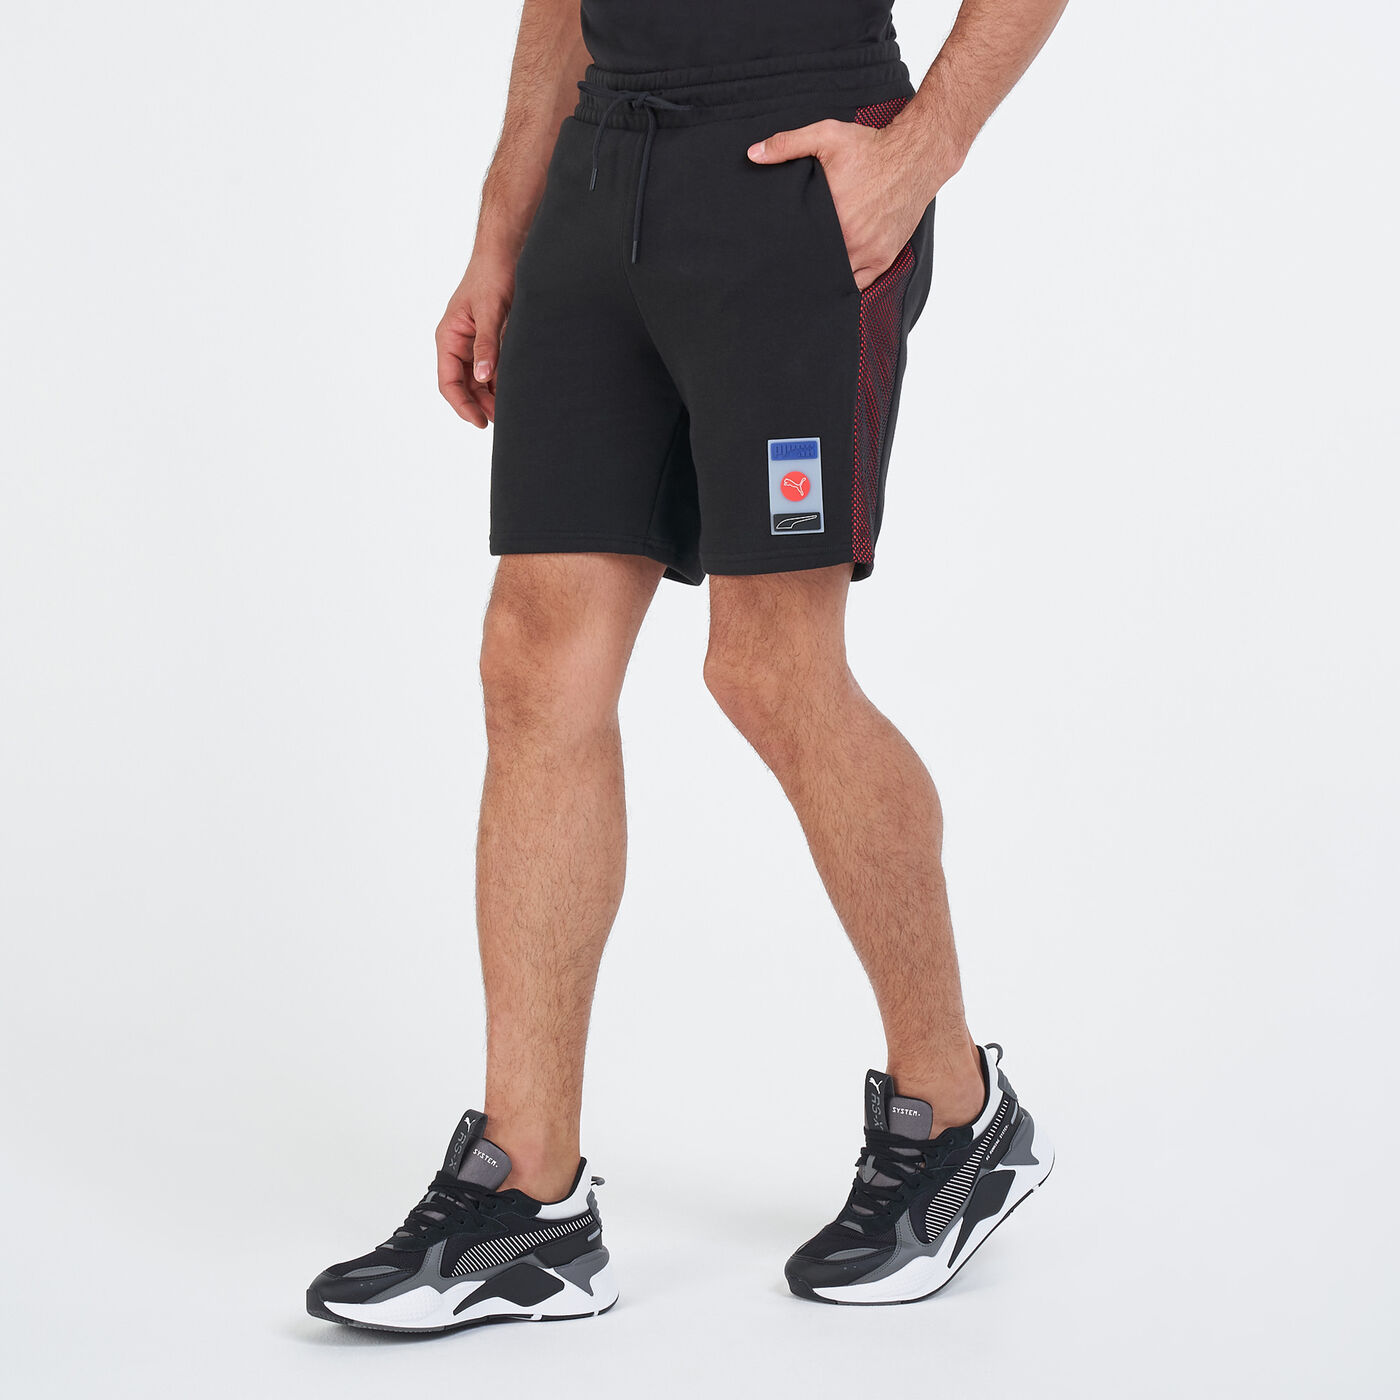 Men's DECOR8 8-Inch Shorts